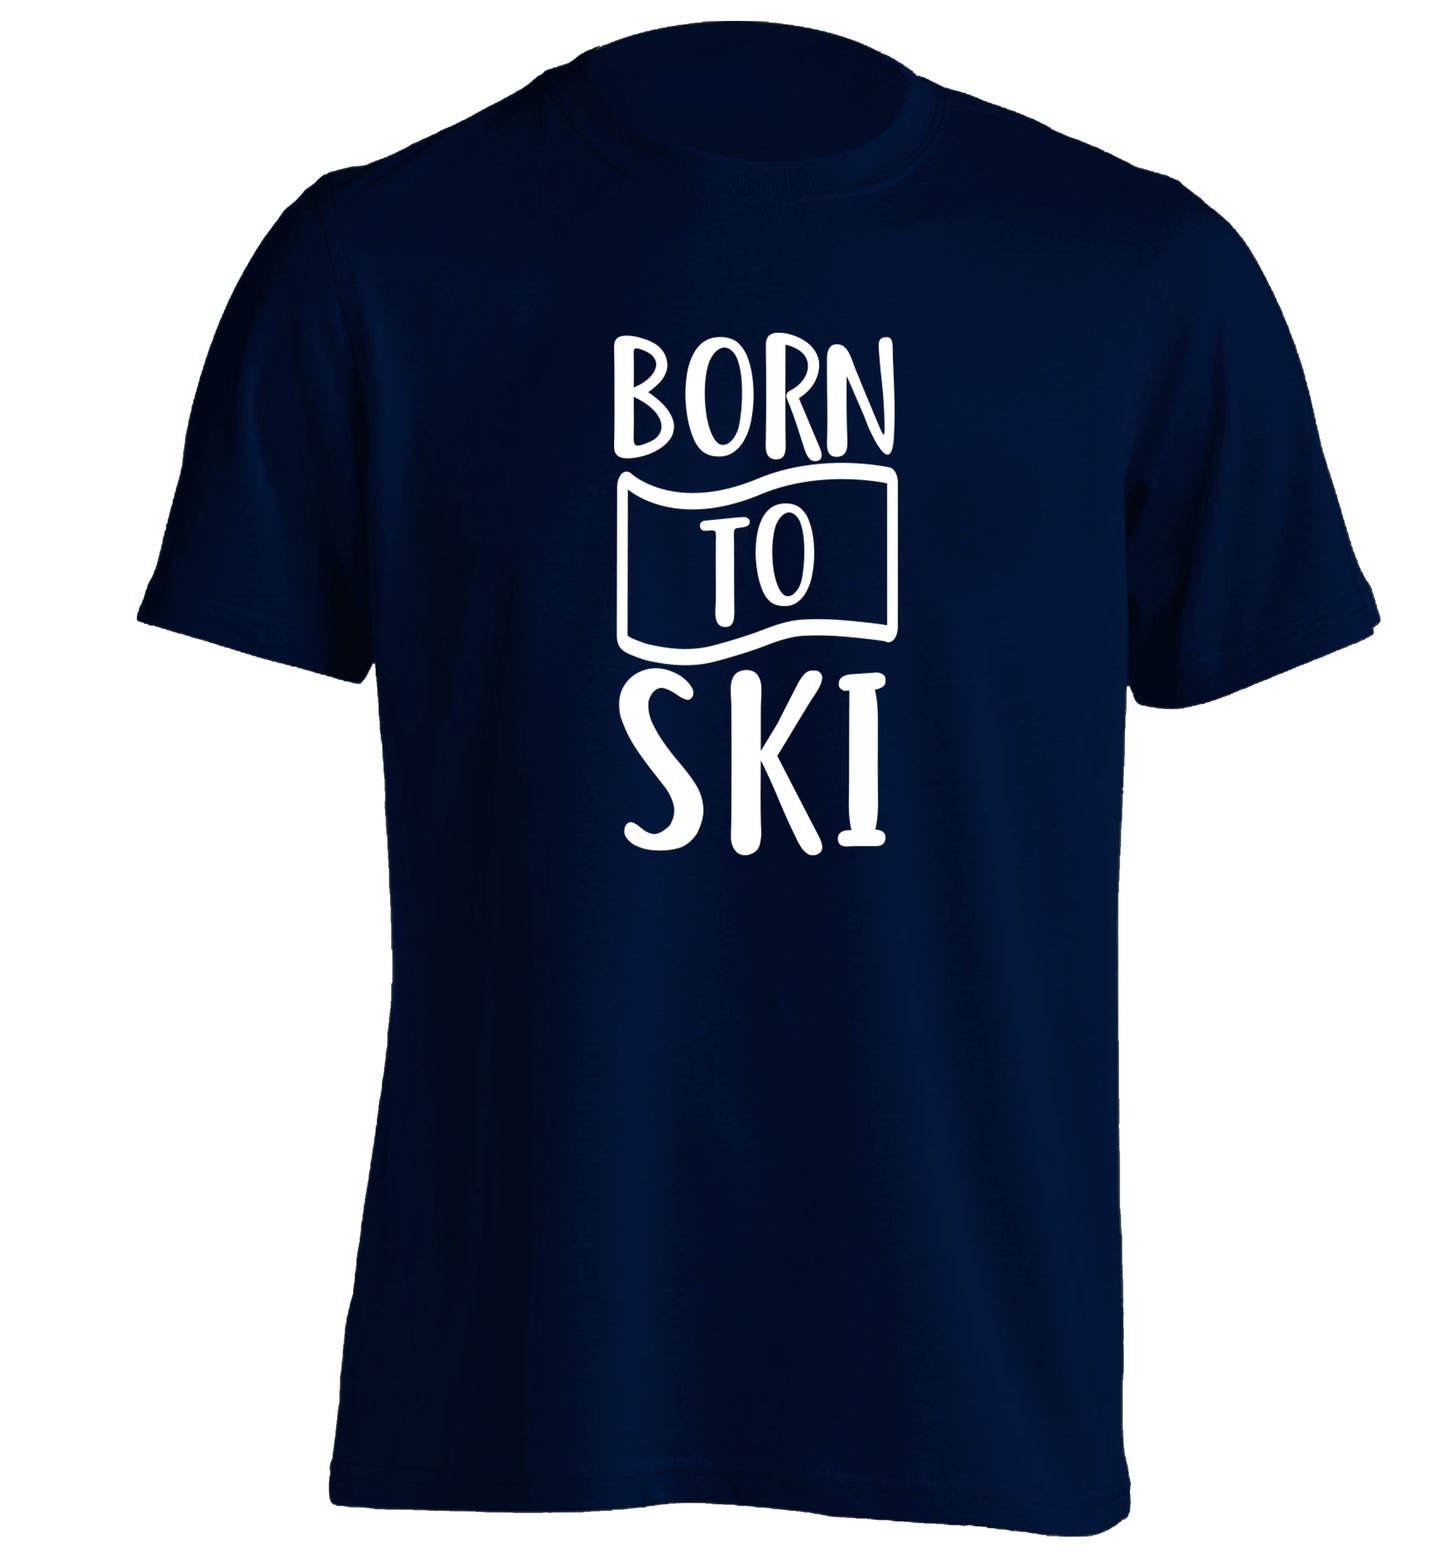 Born to ski adults unisexnavy Tshirt 2XL